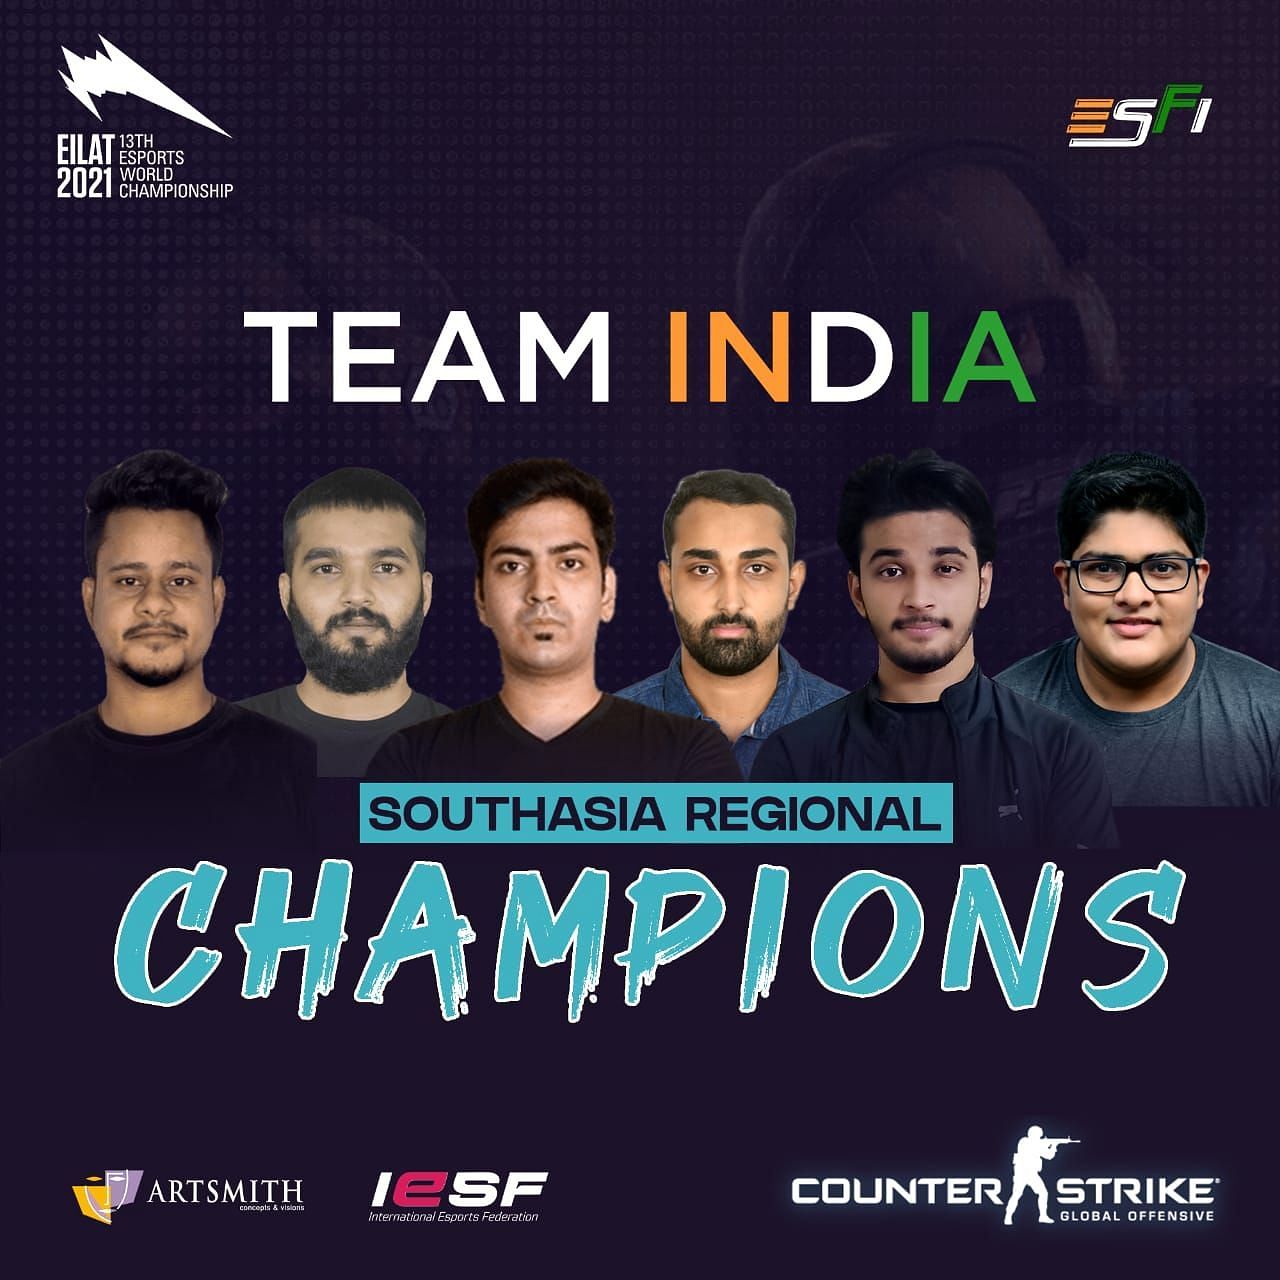 The Indian CS: GO team for the 13th Esports World Championship (Image via ESFI)